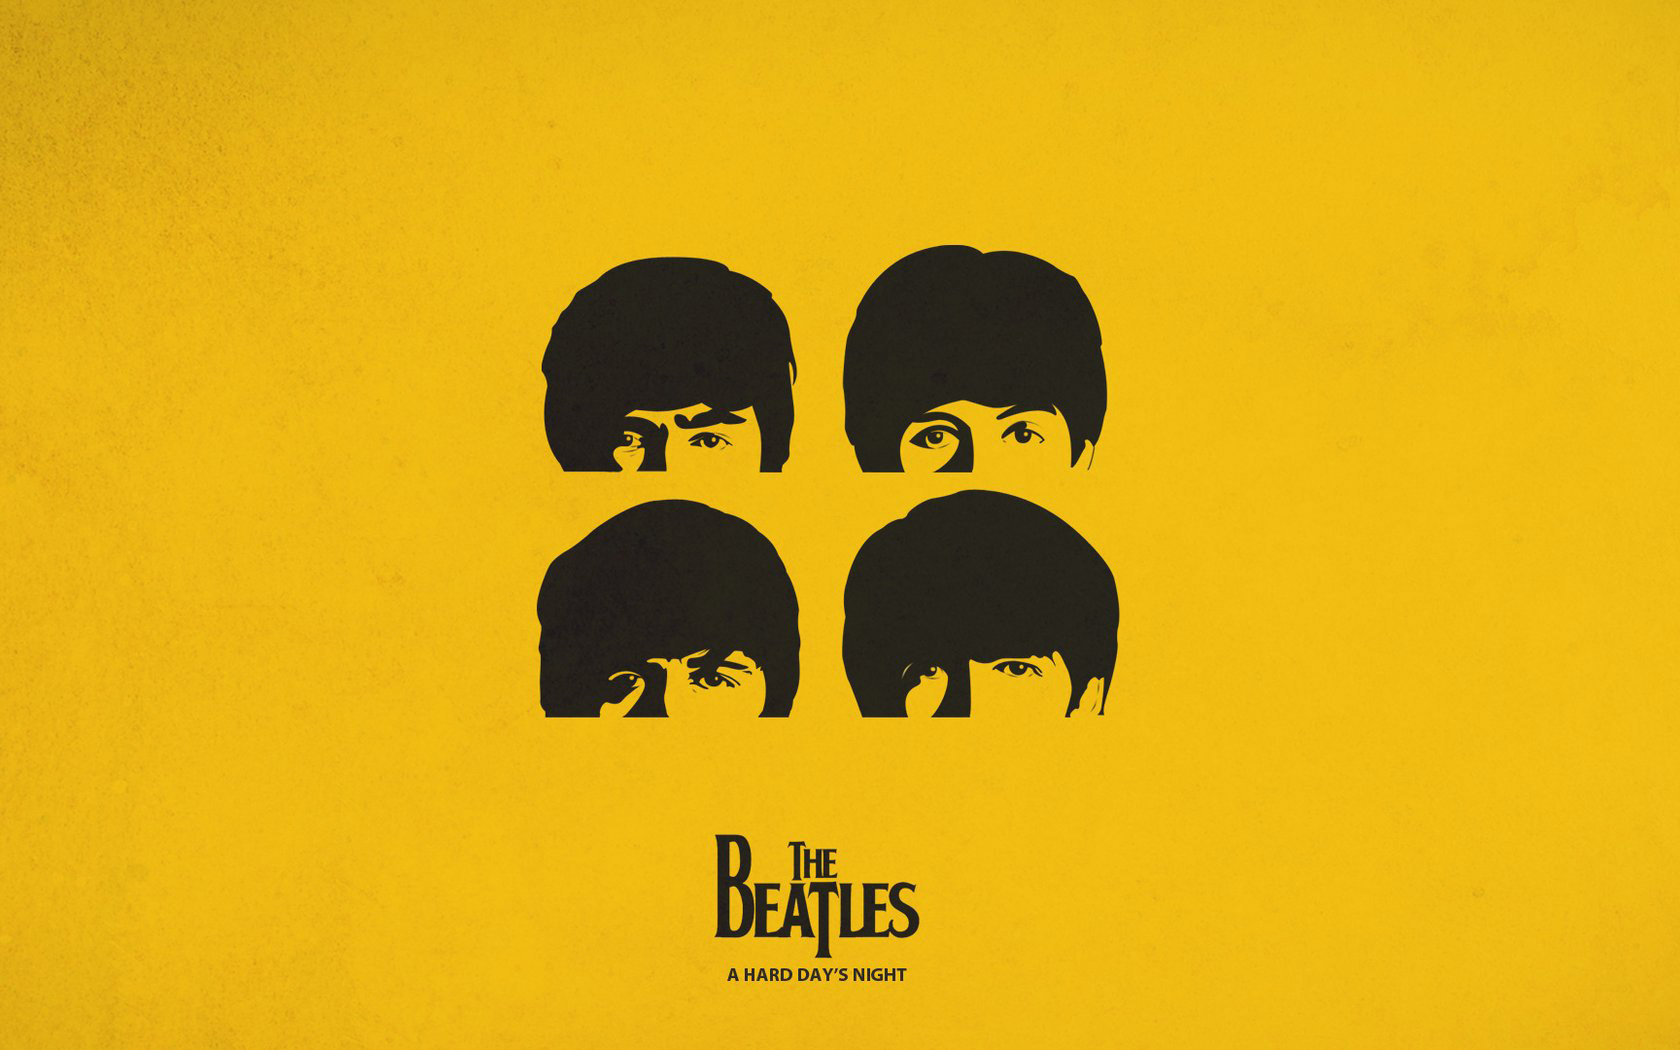 The Beatles John Lennon Paul McCartney George Harrison Ringo Starr Band 1680x1050